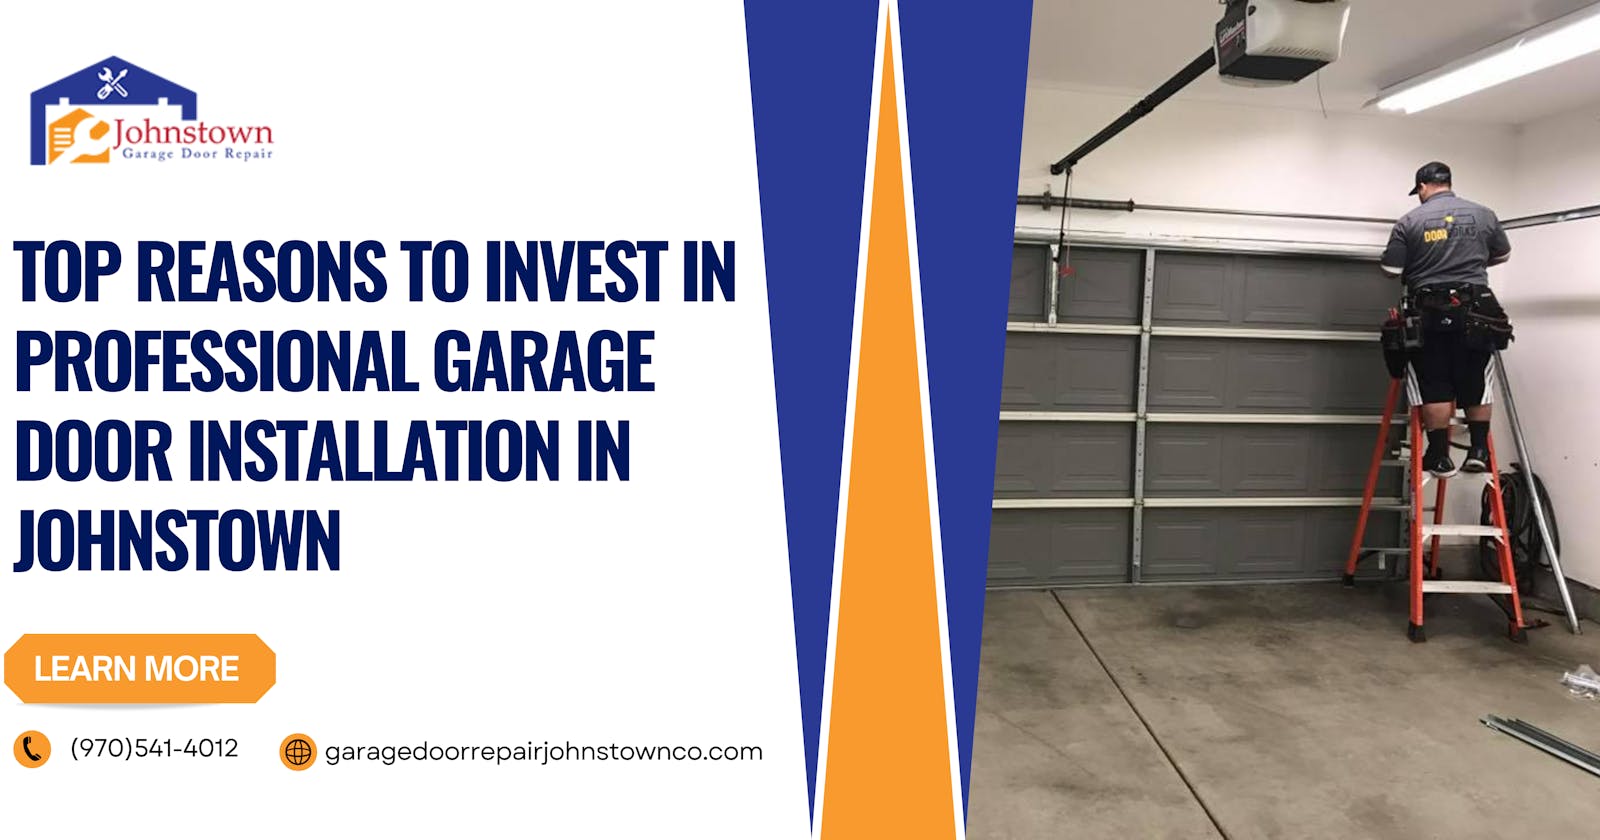 Top Reasons to Invest in Professional Garage Door Installation in Johnstown